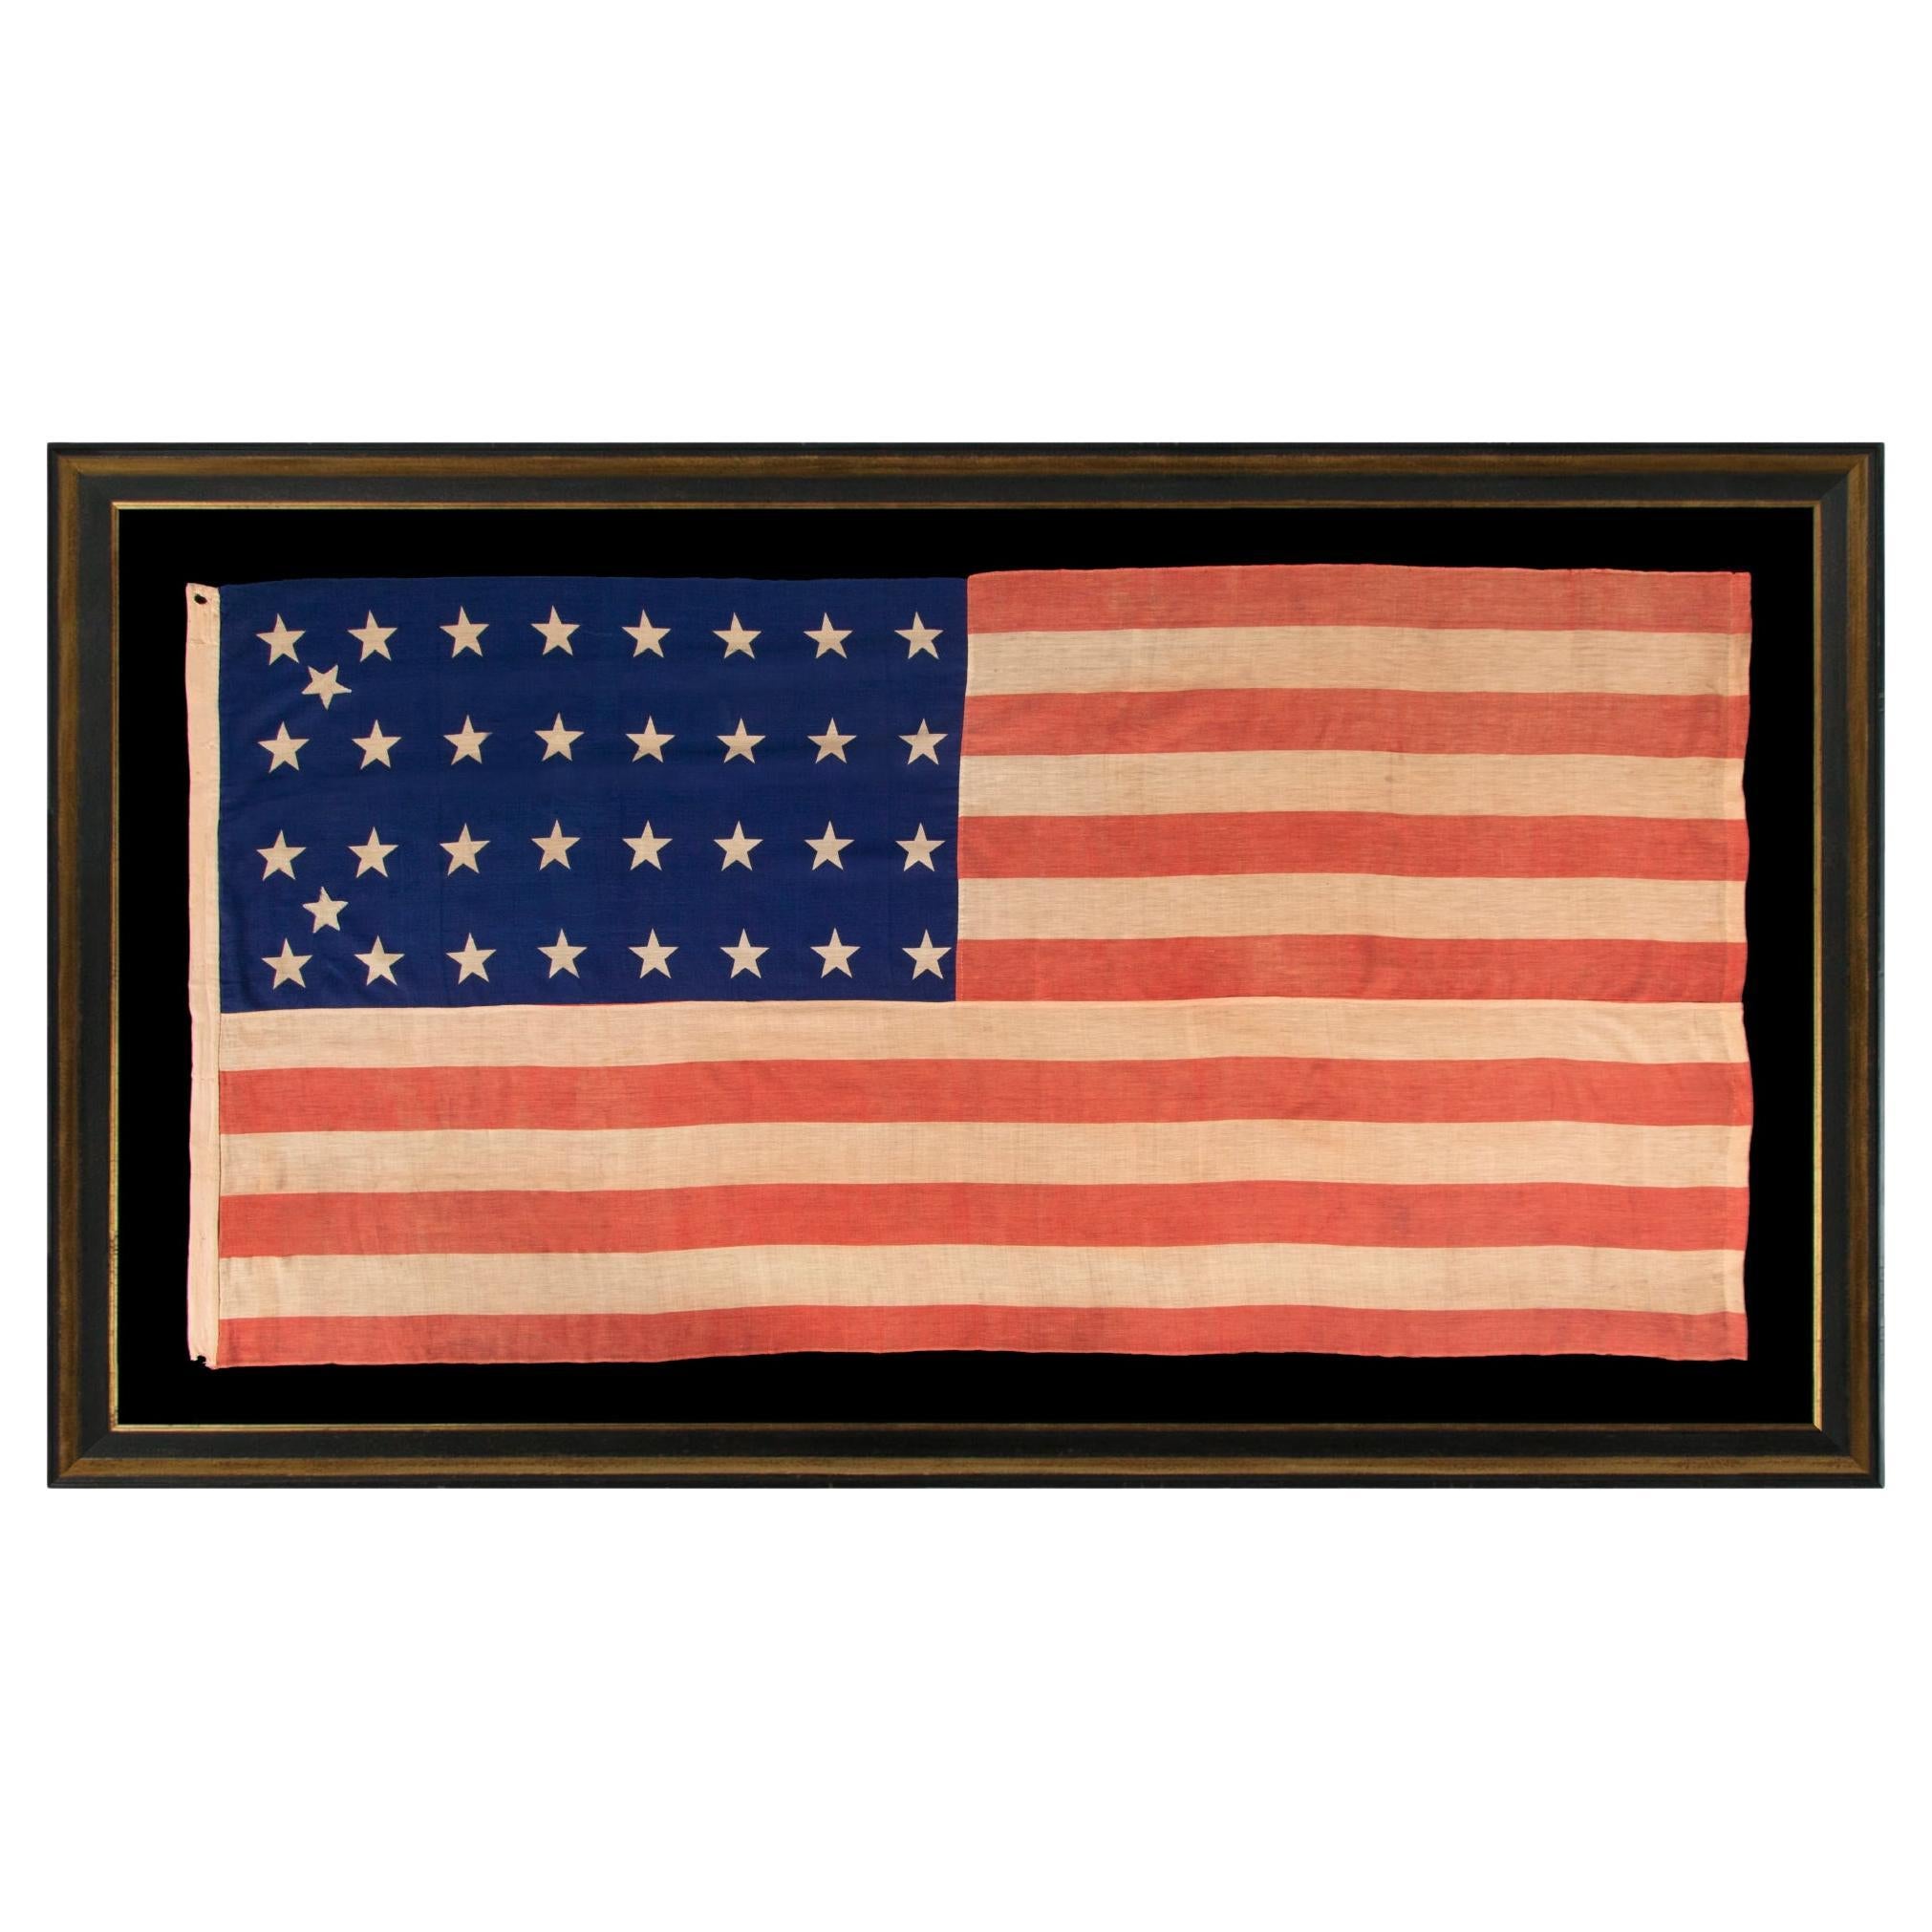 34 Star Antique American flag, Kansas Statehood, Civil War Period, ca 1861-1863